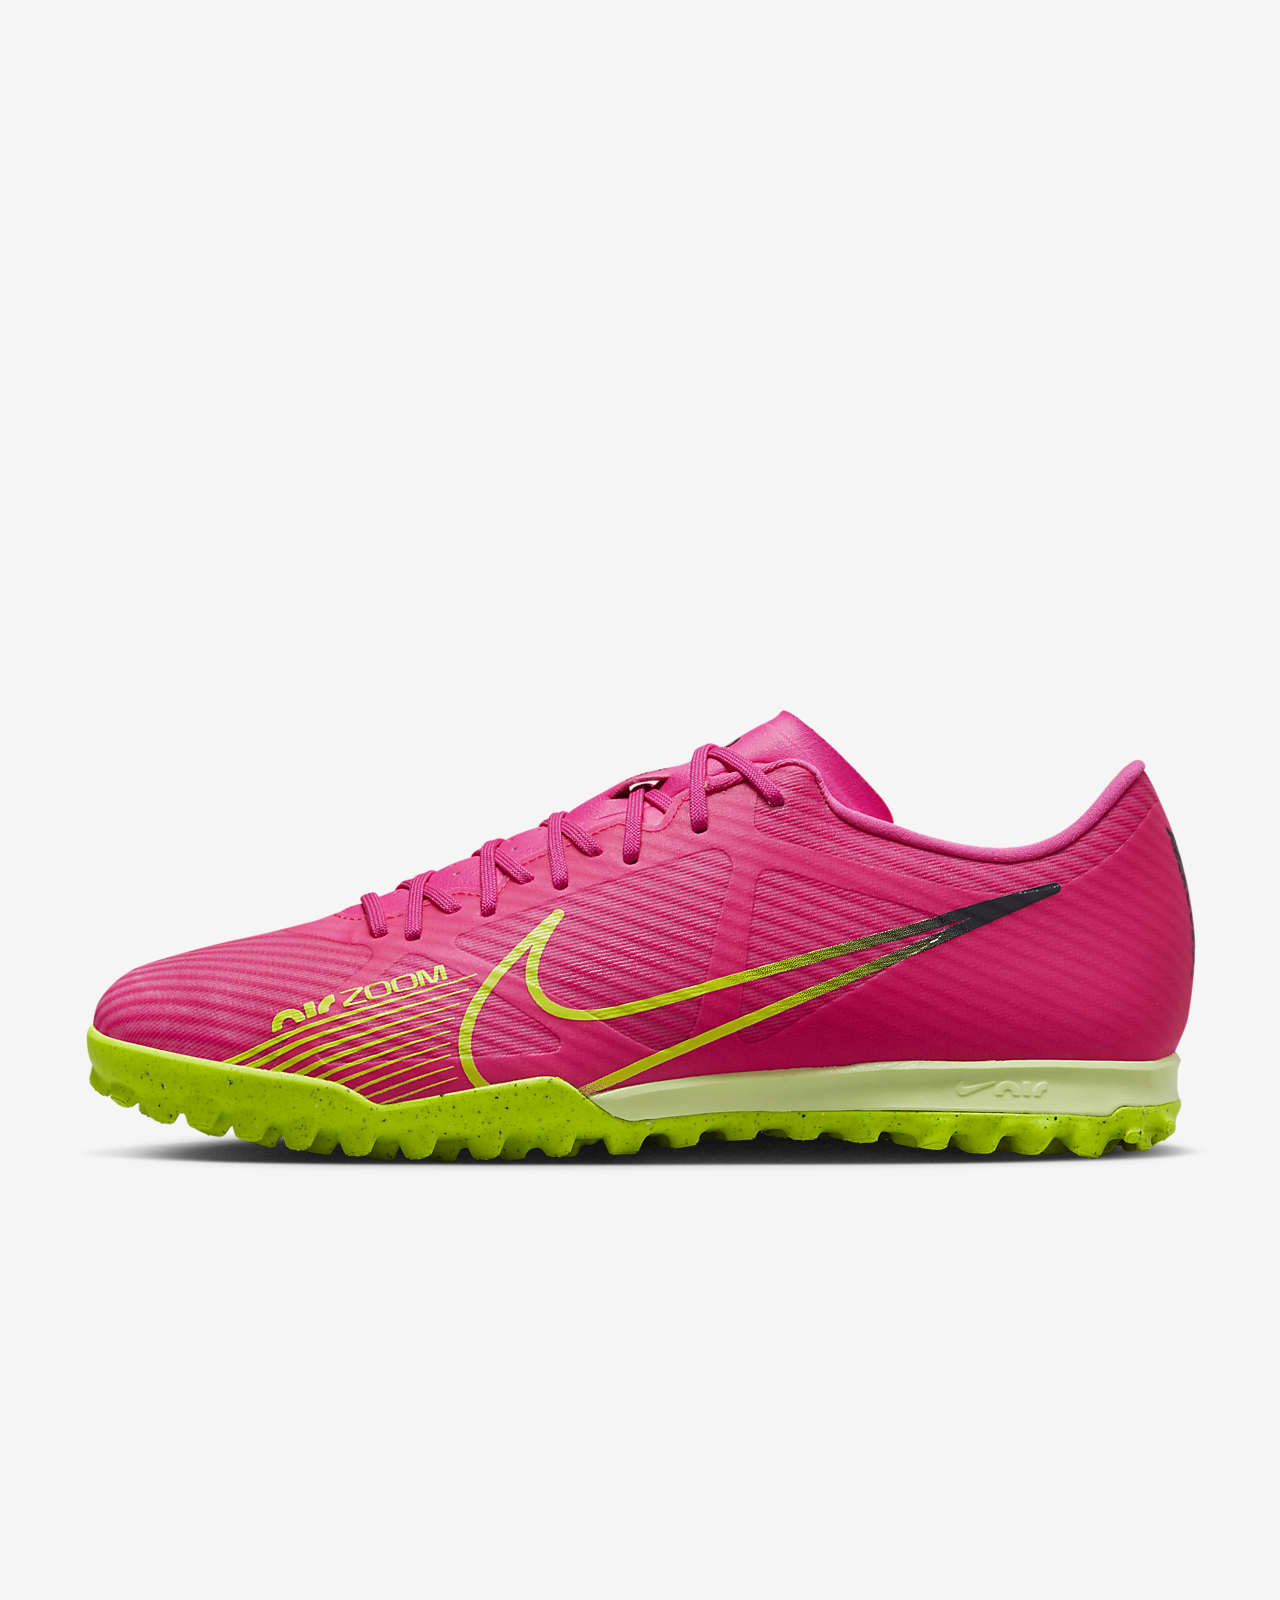 Nike Mercurial Vapor 15 Academy Turf Football Shoes Size 7 (Pink)